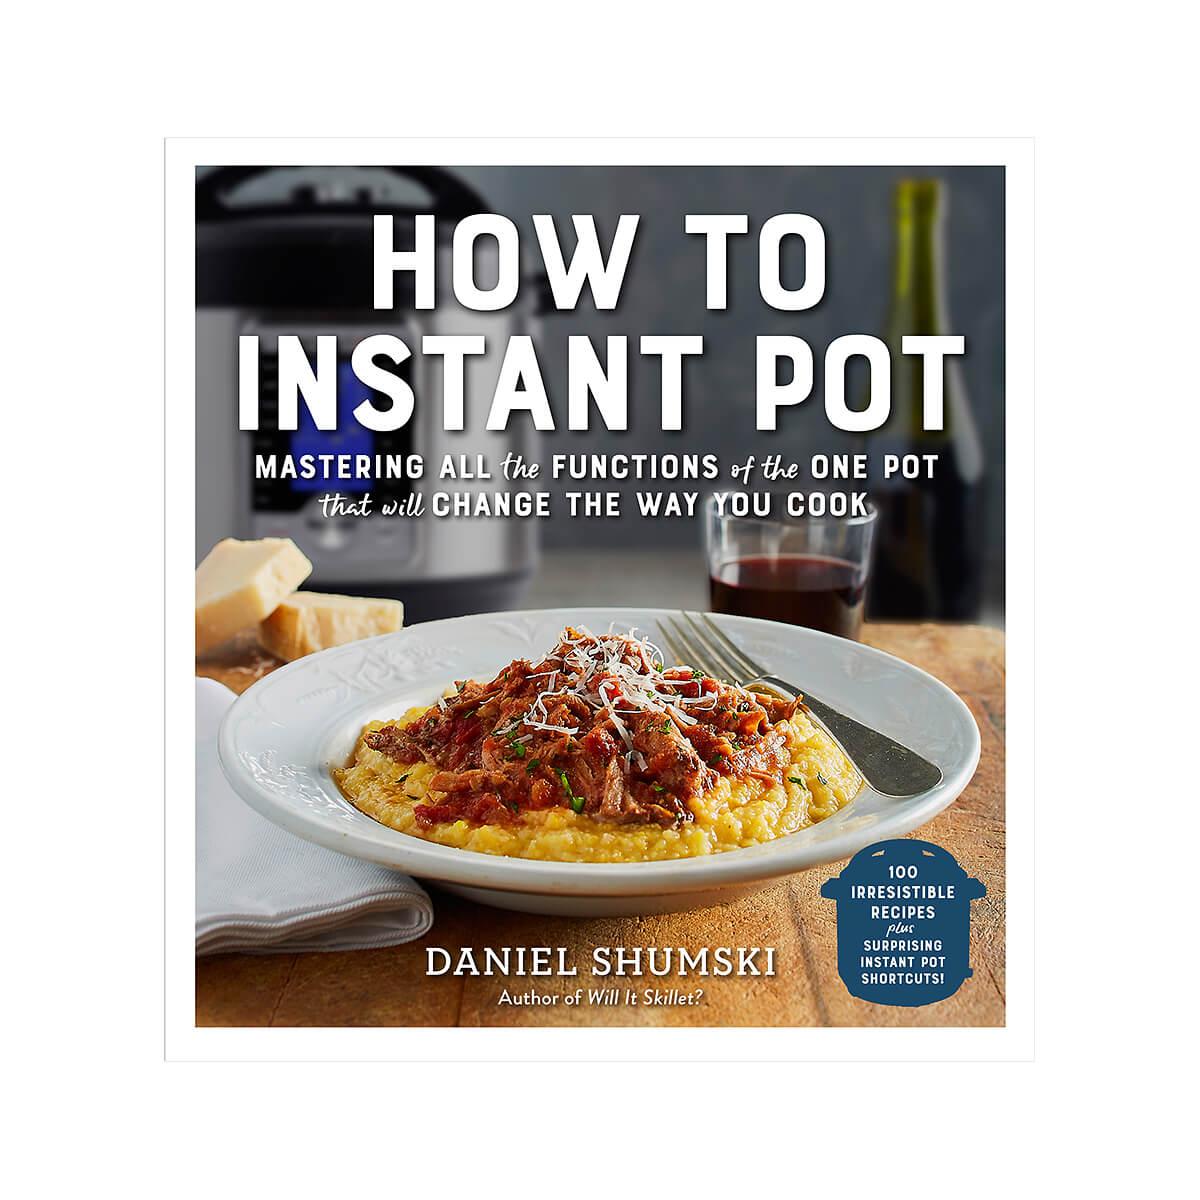  How To Instant Pot Cookbook